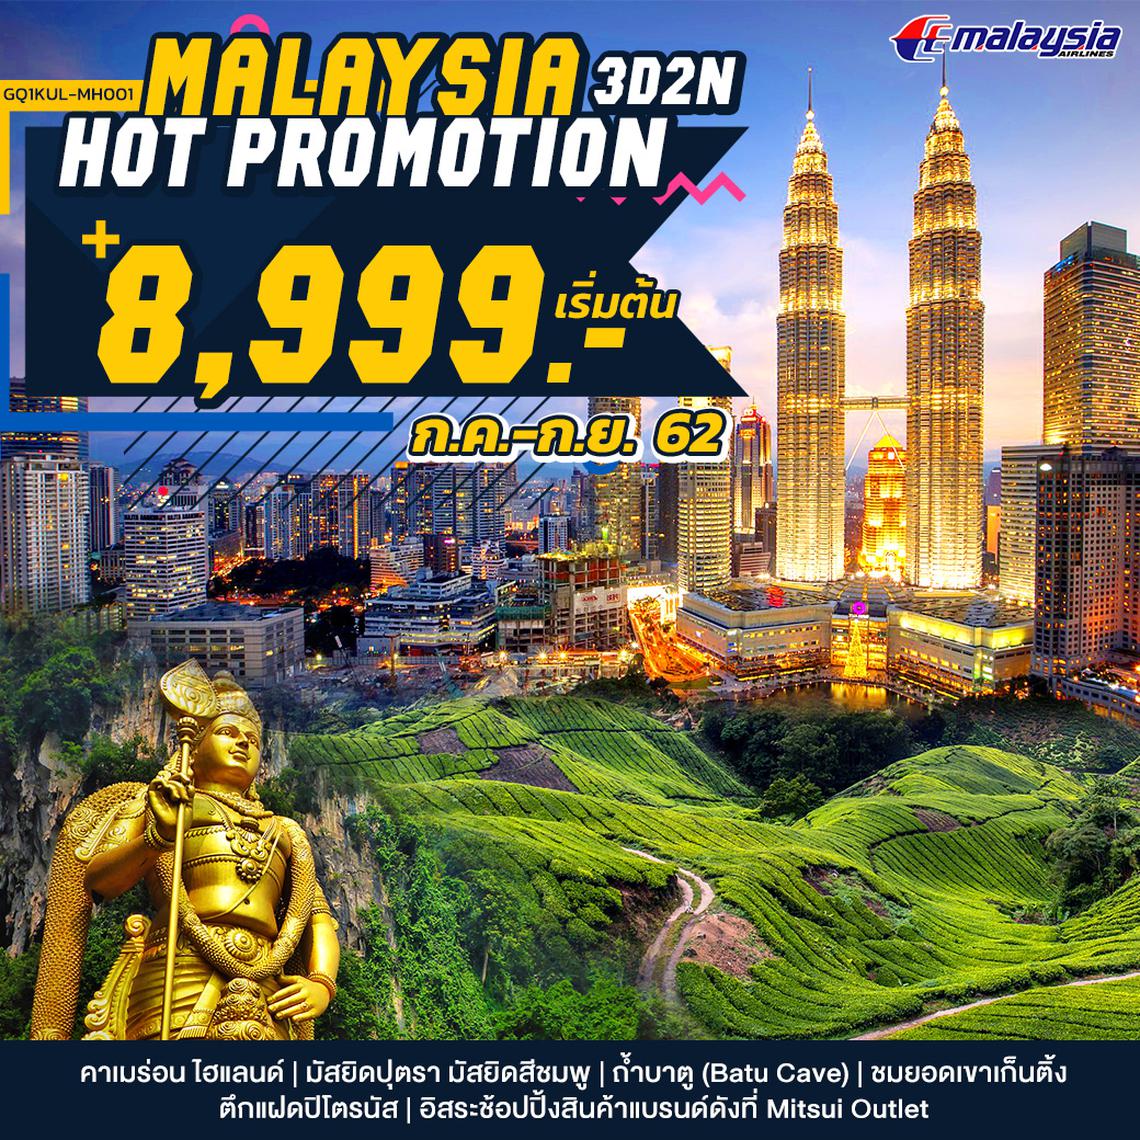 MALAYSIA HOT PROMOTION 3 วัน 2 คืน โดยสายการบินมาเลเซียแอร์ไลน์ (MH)